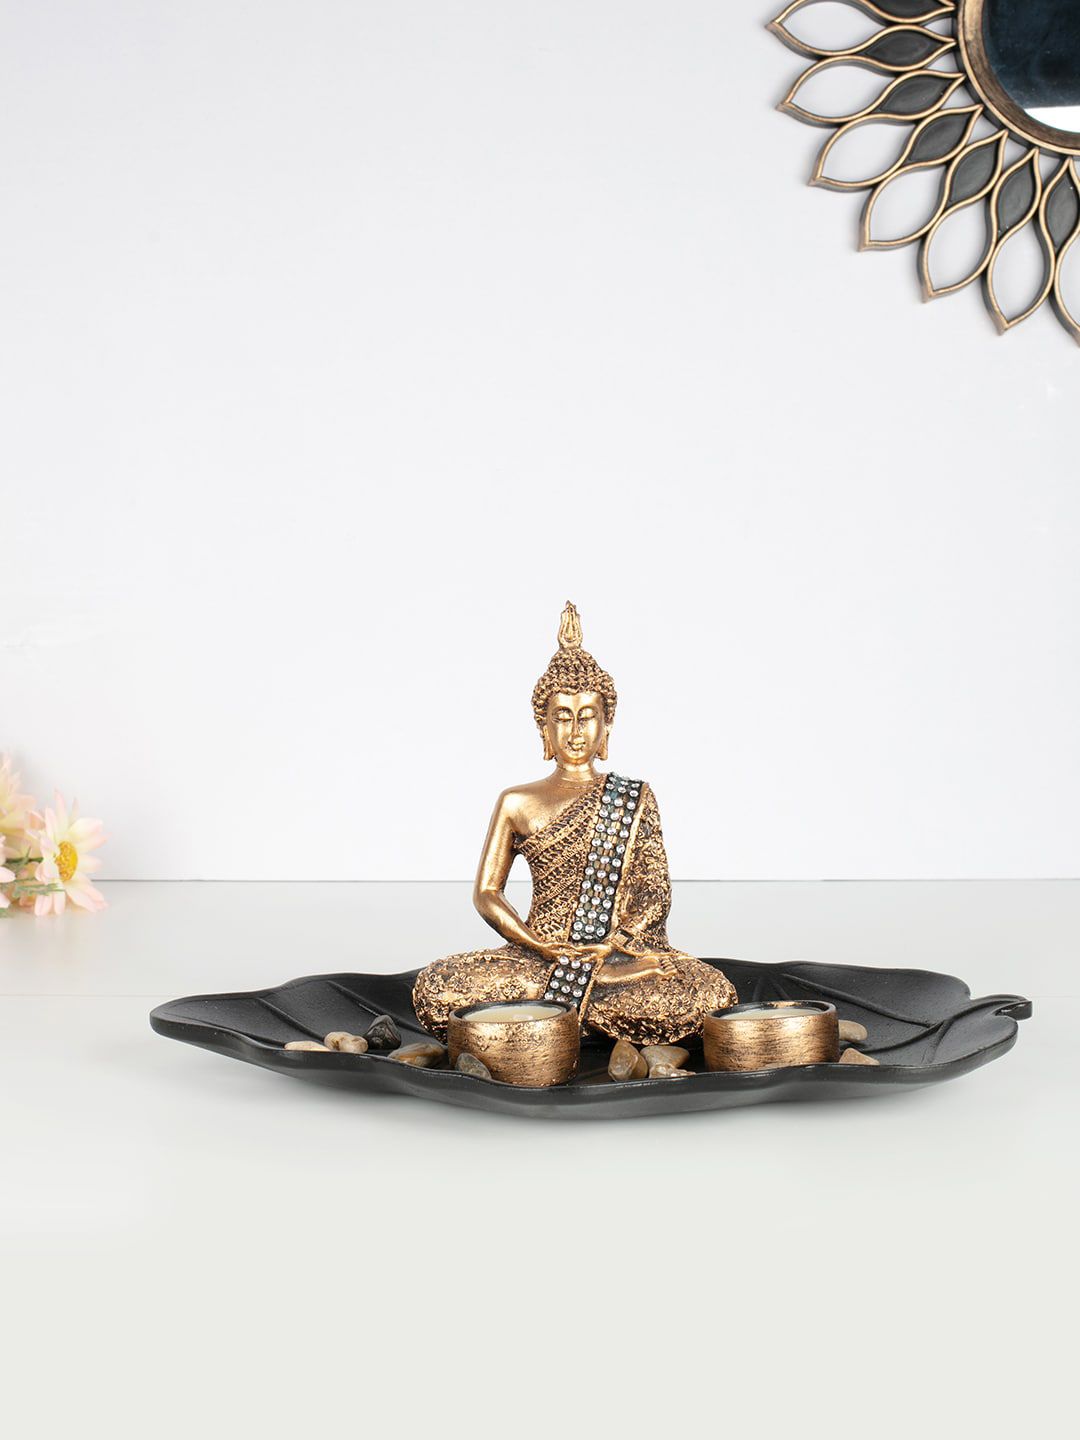 HomeTown Gold-Toned Buddha Figurine Cum T-Light Holder Showpiece Price in India